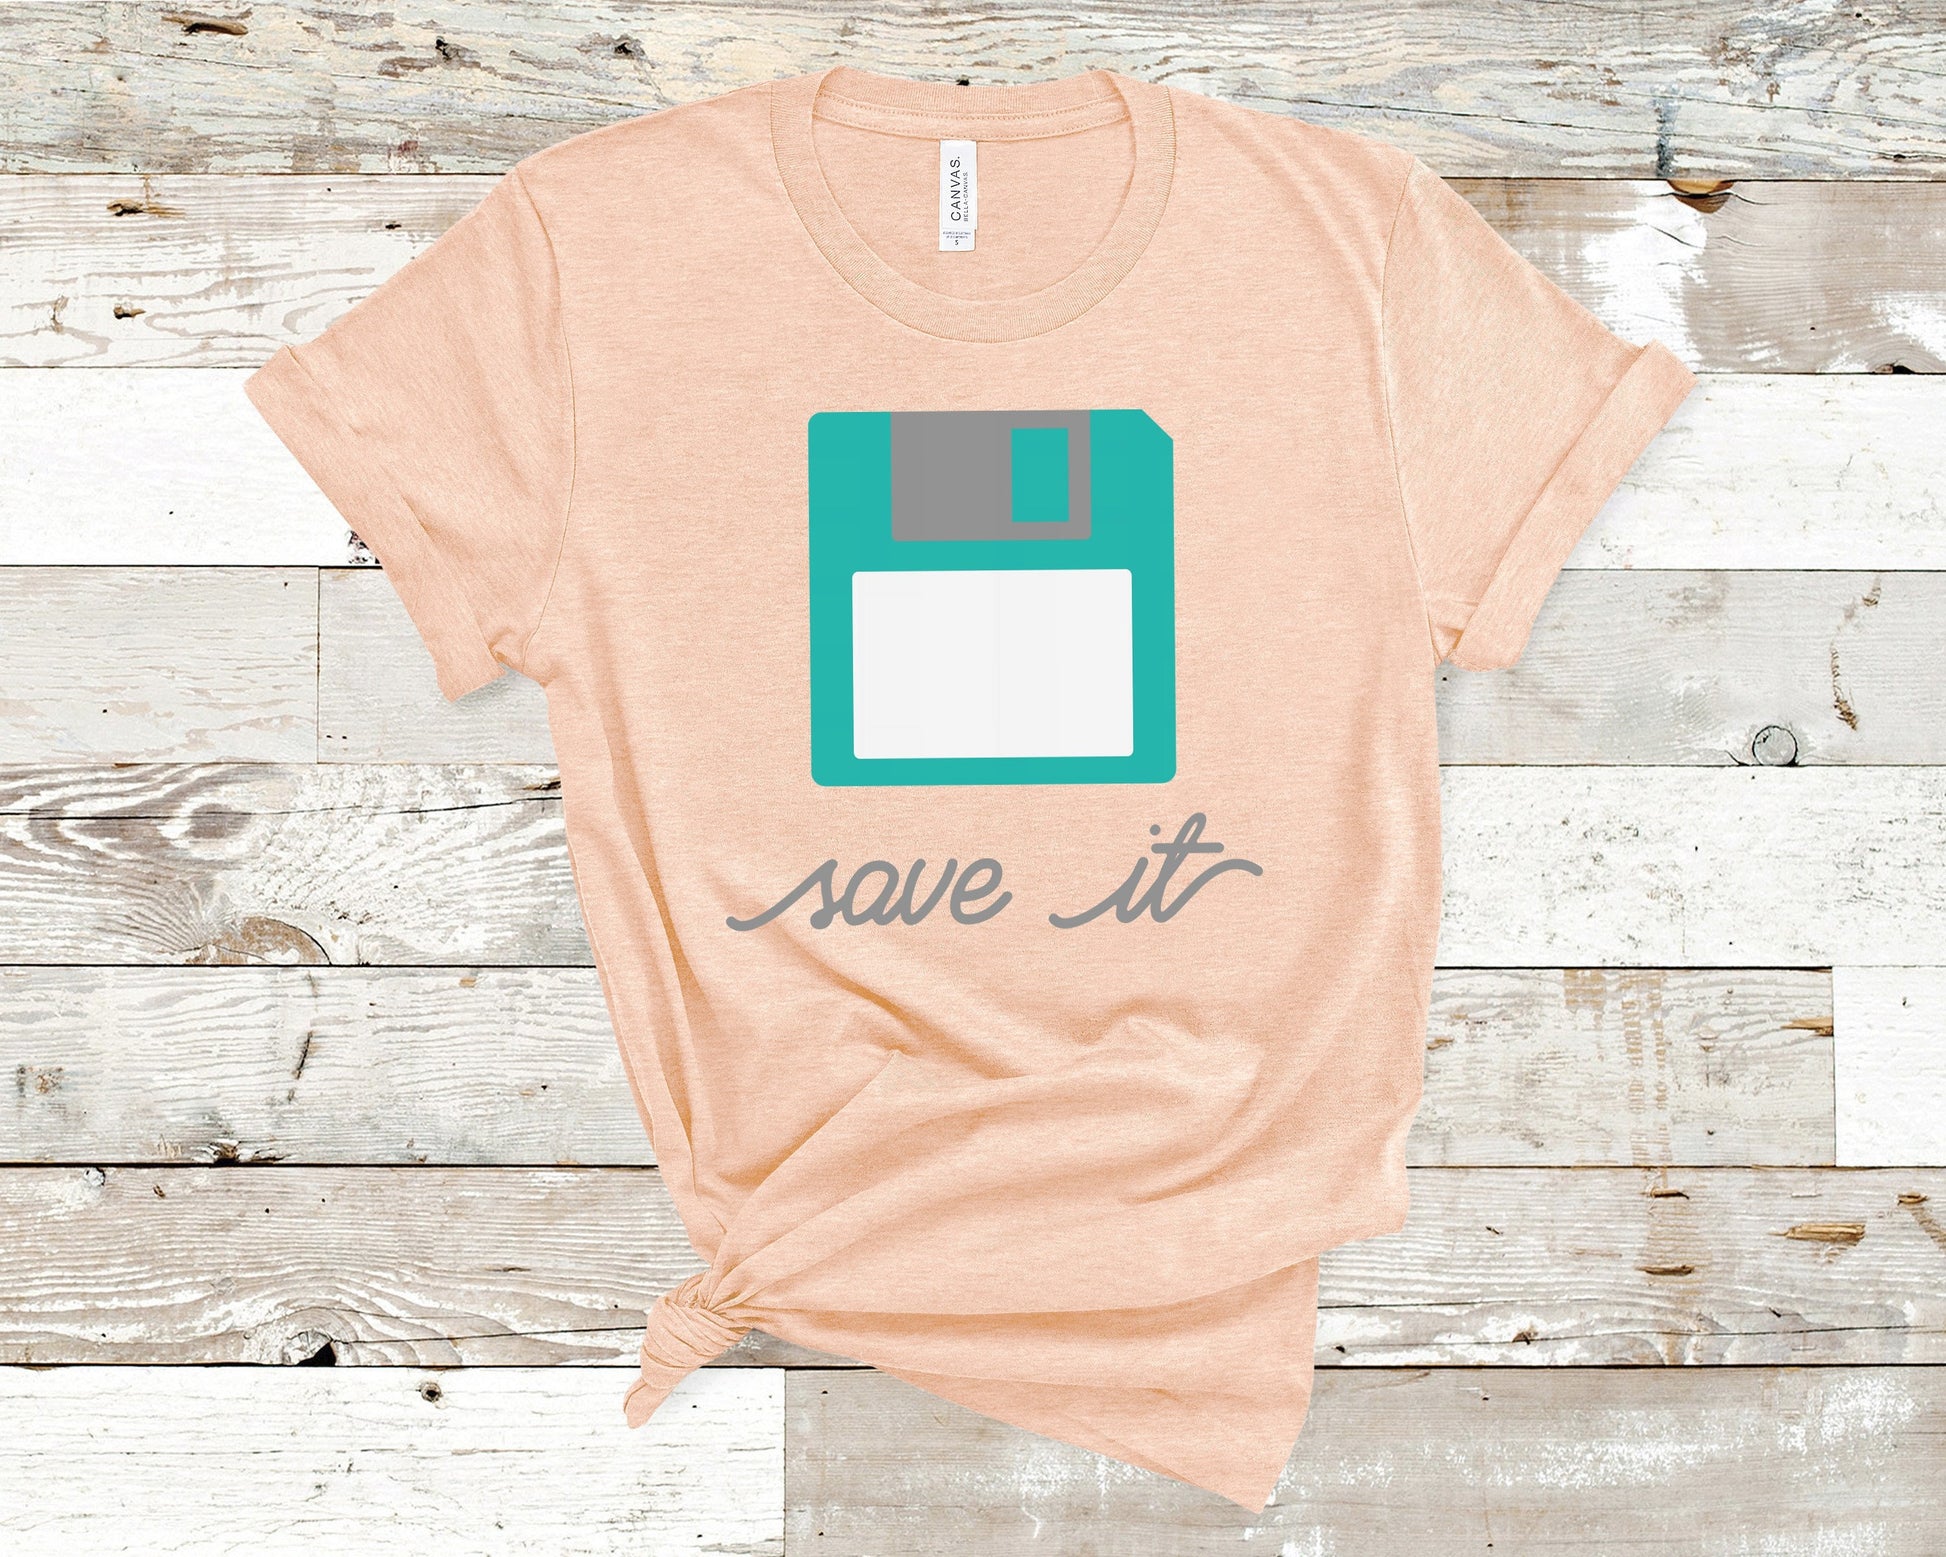 Save It Unisex Adult t-shirt - retro t-shirt - floppy disk t-shirt - funny shirt - computer nerd shirt - 80s & 90s shirt - funny geek shirt